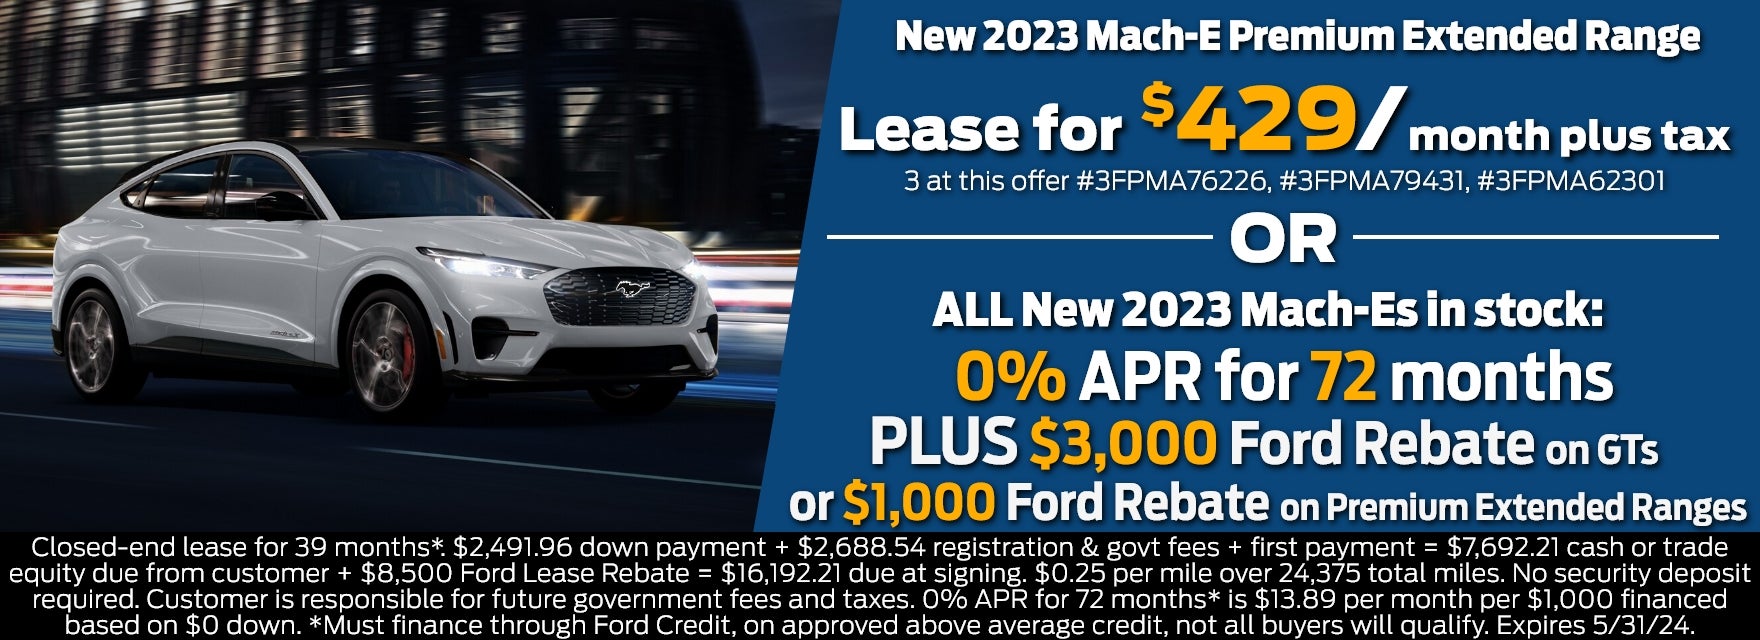 New 2023 Mach-E Premium Extended Range Lease for $429 